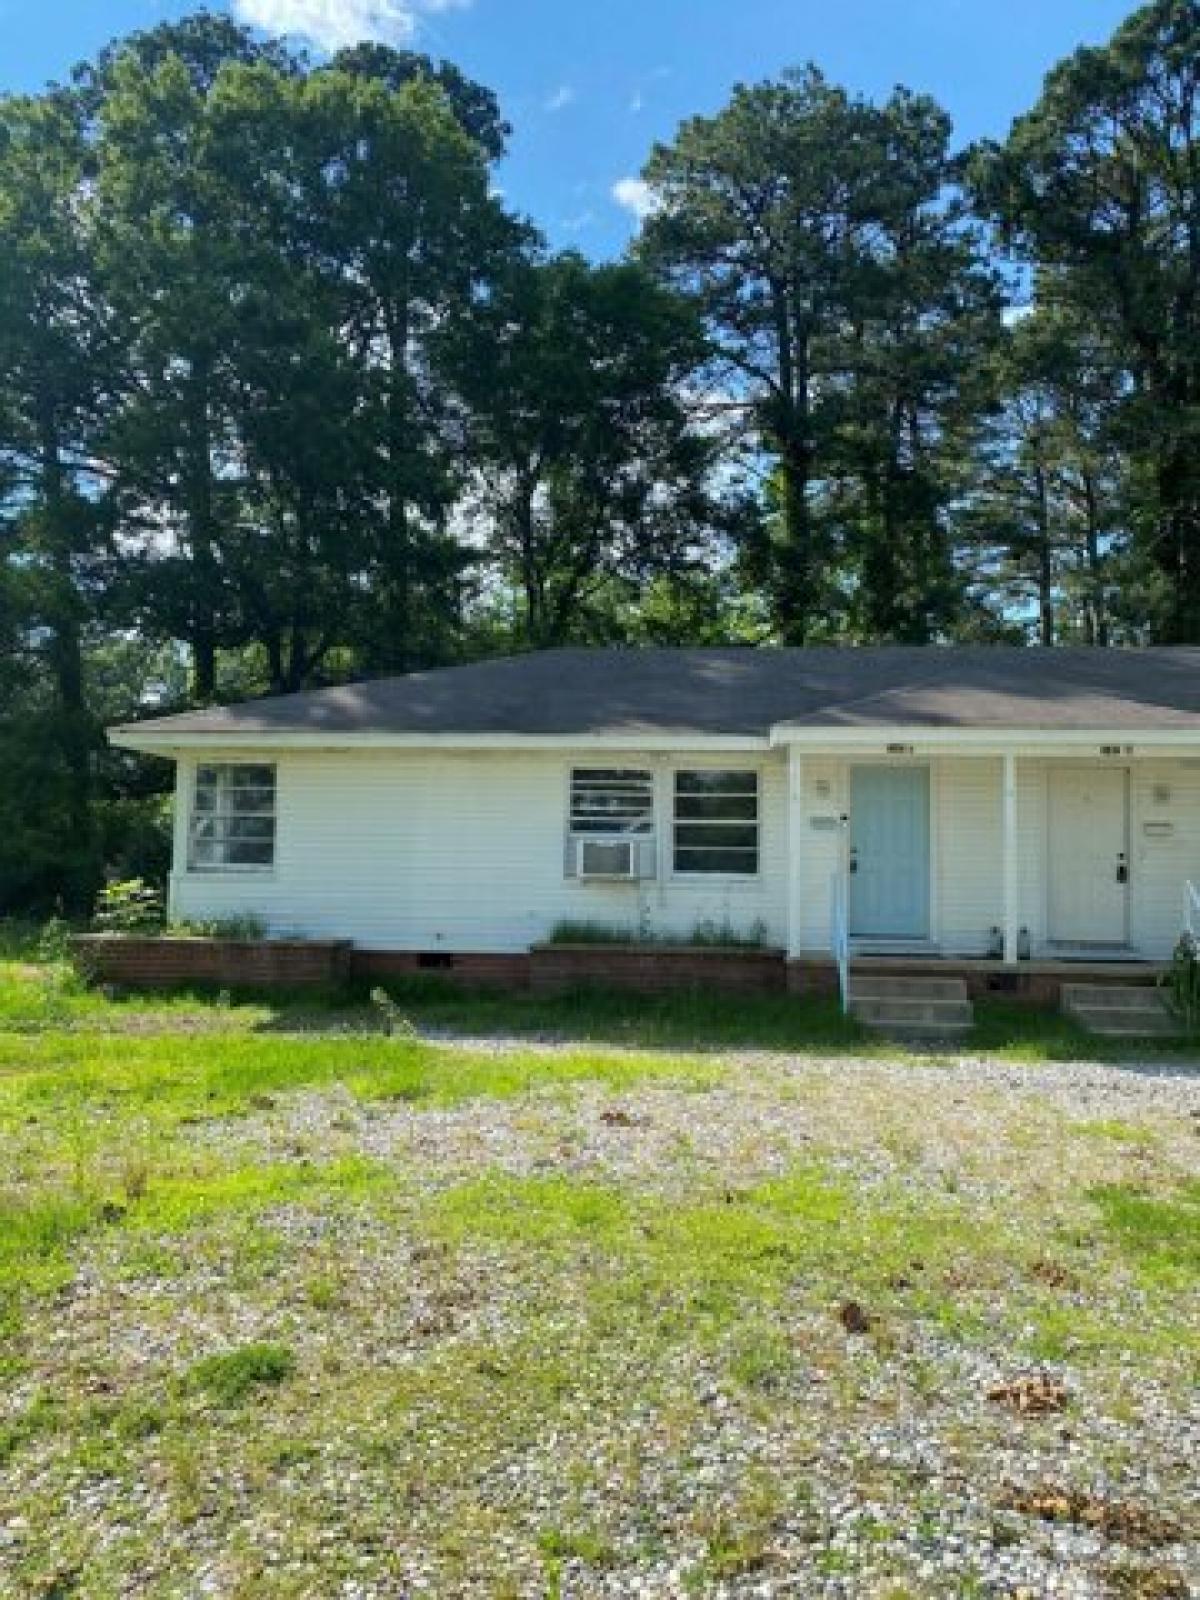 Picture of Home For Sale in Prescott, Arkansas, United States